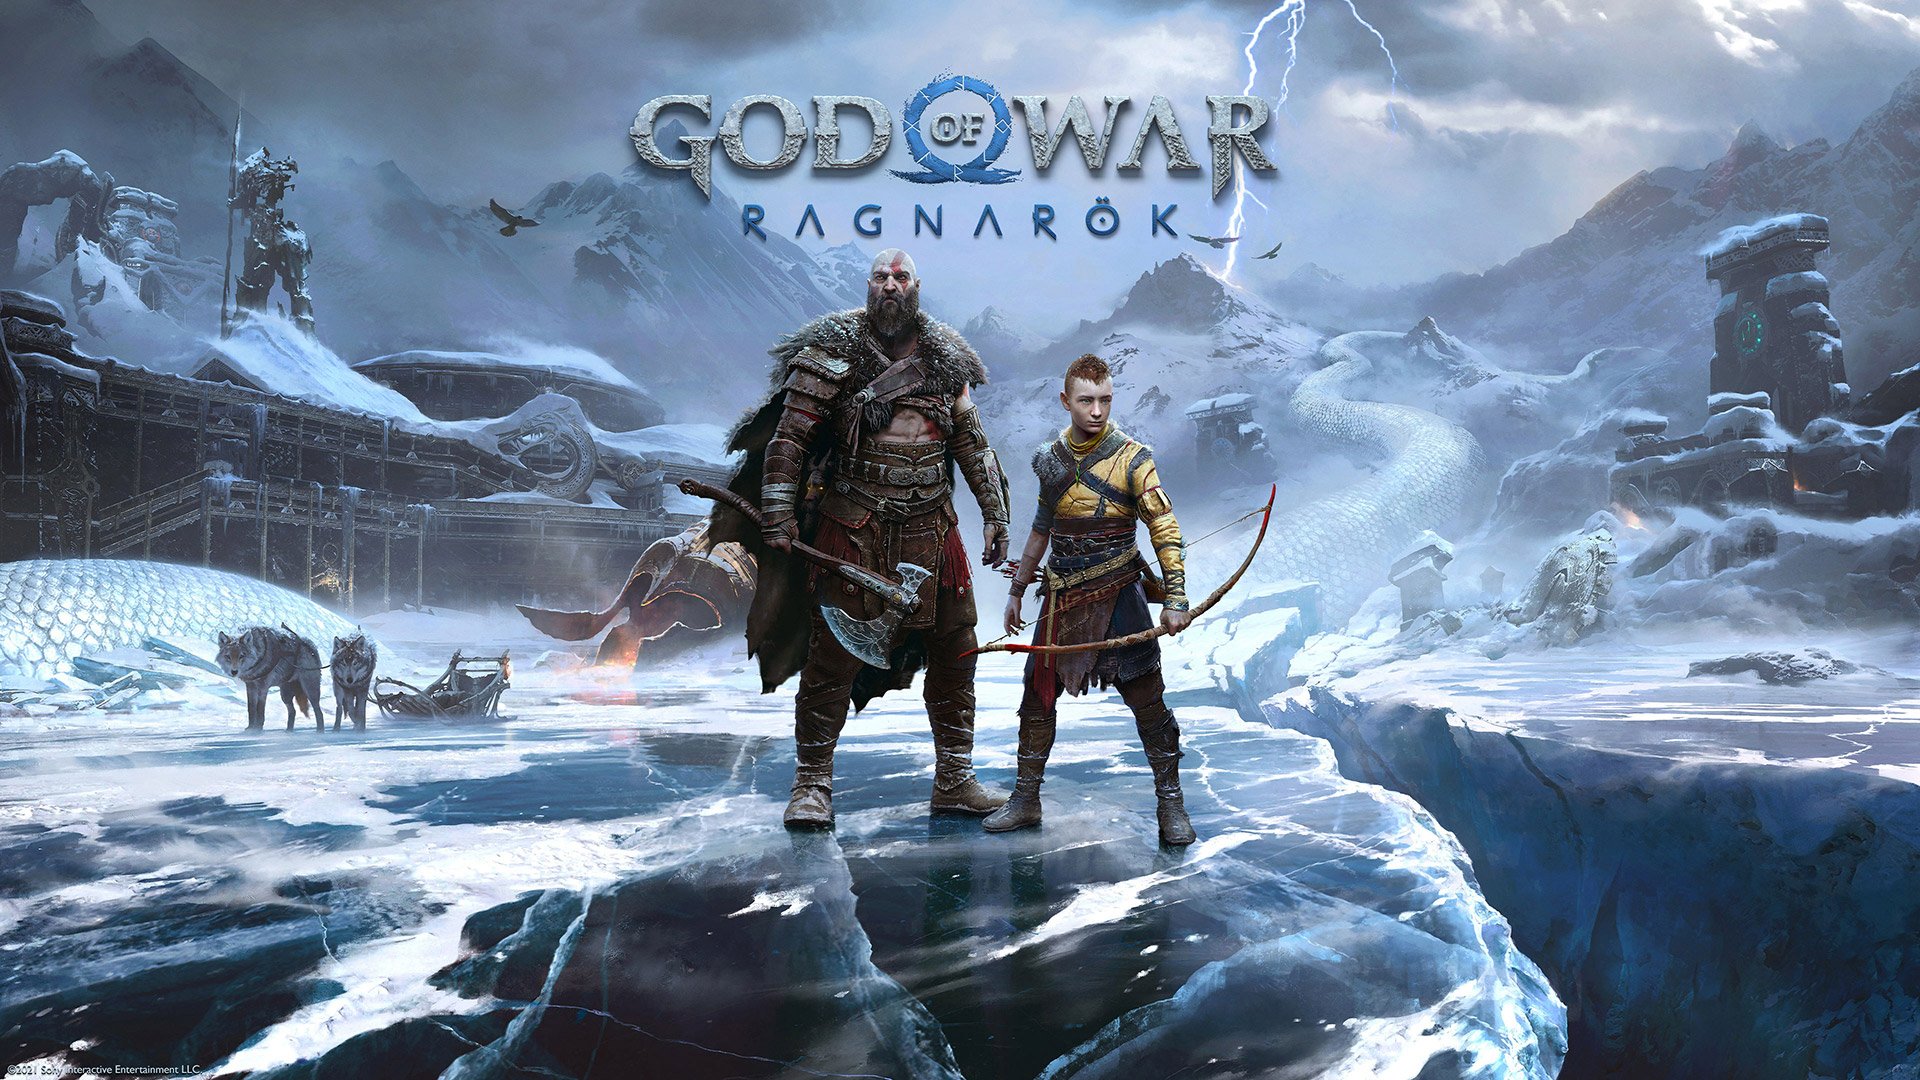 God of War: Ragnarok - grafika promocyjna